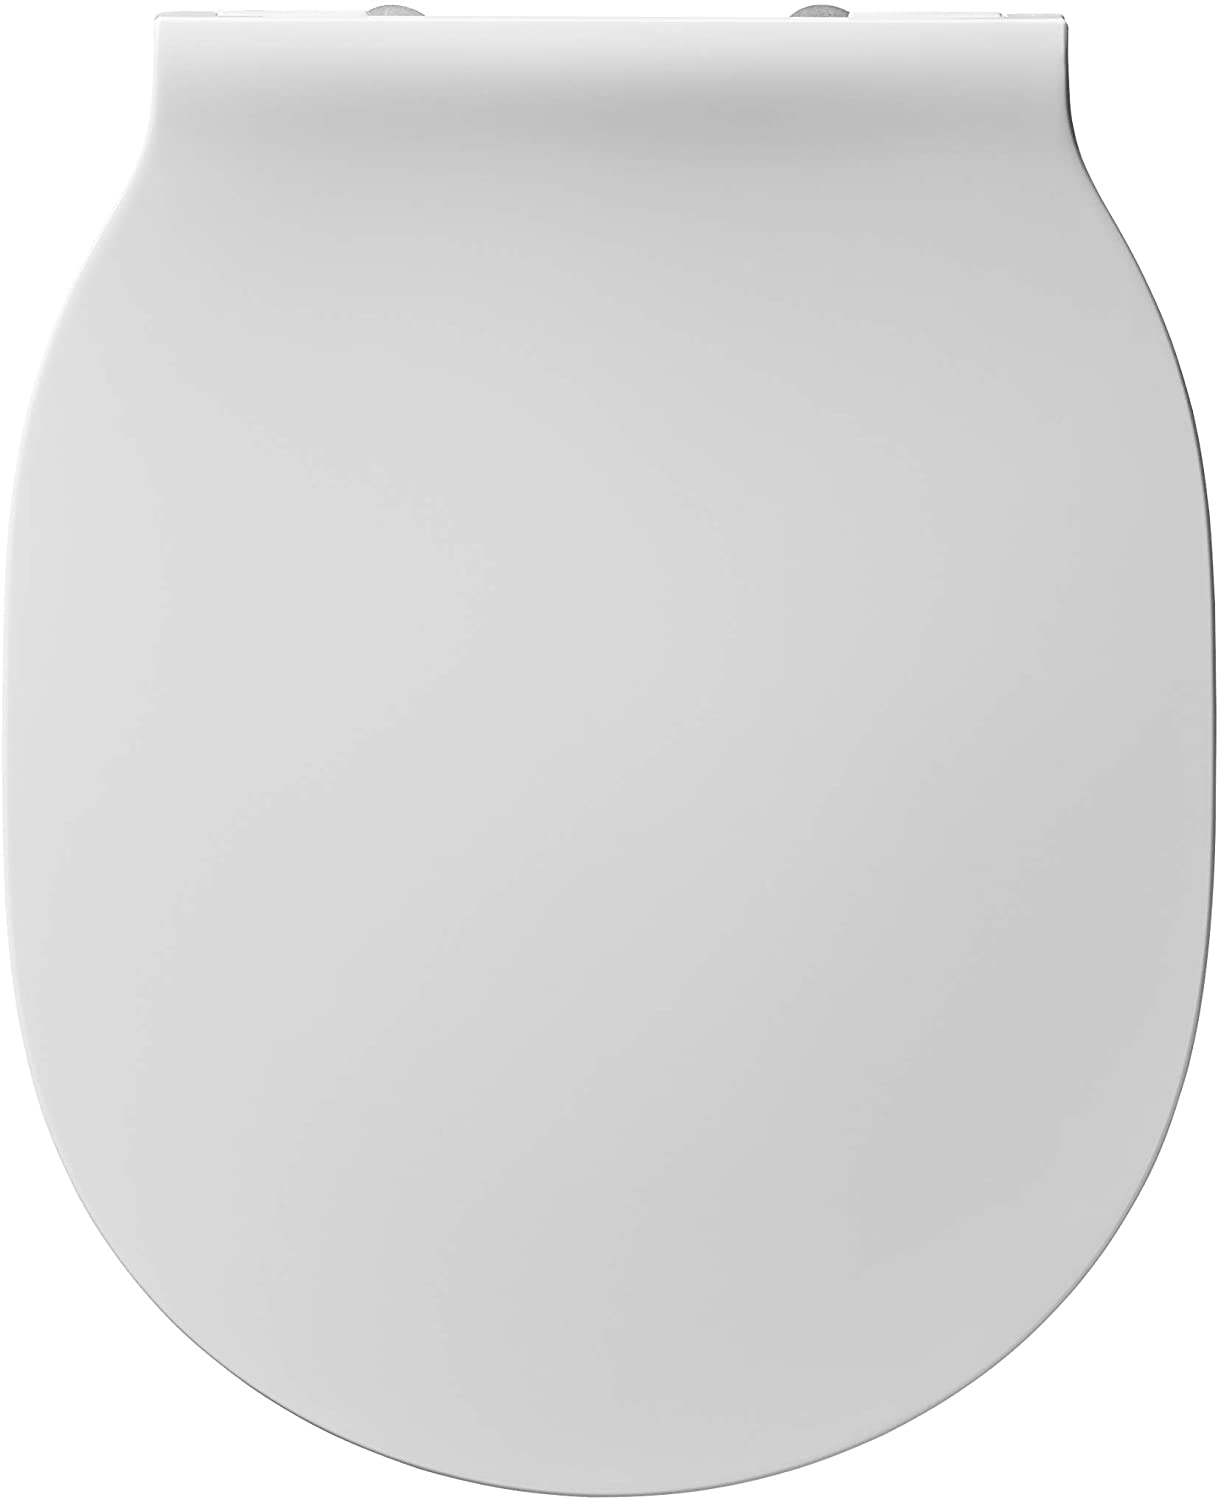 Ideal Standard E081101 Concept Air Soft Close seat Toilet, White